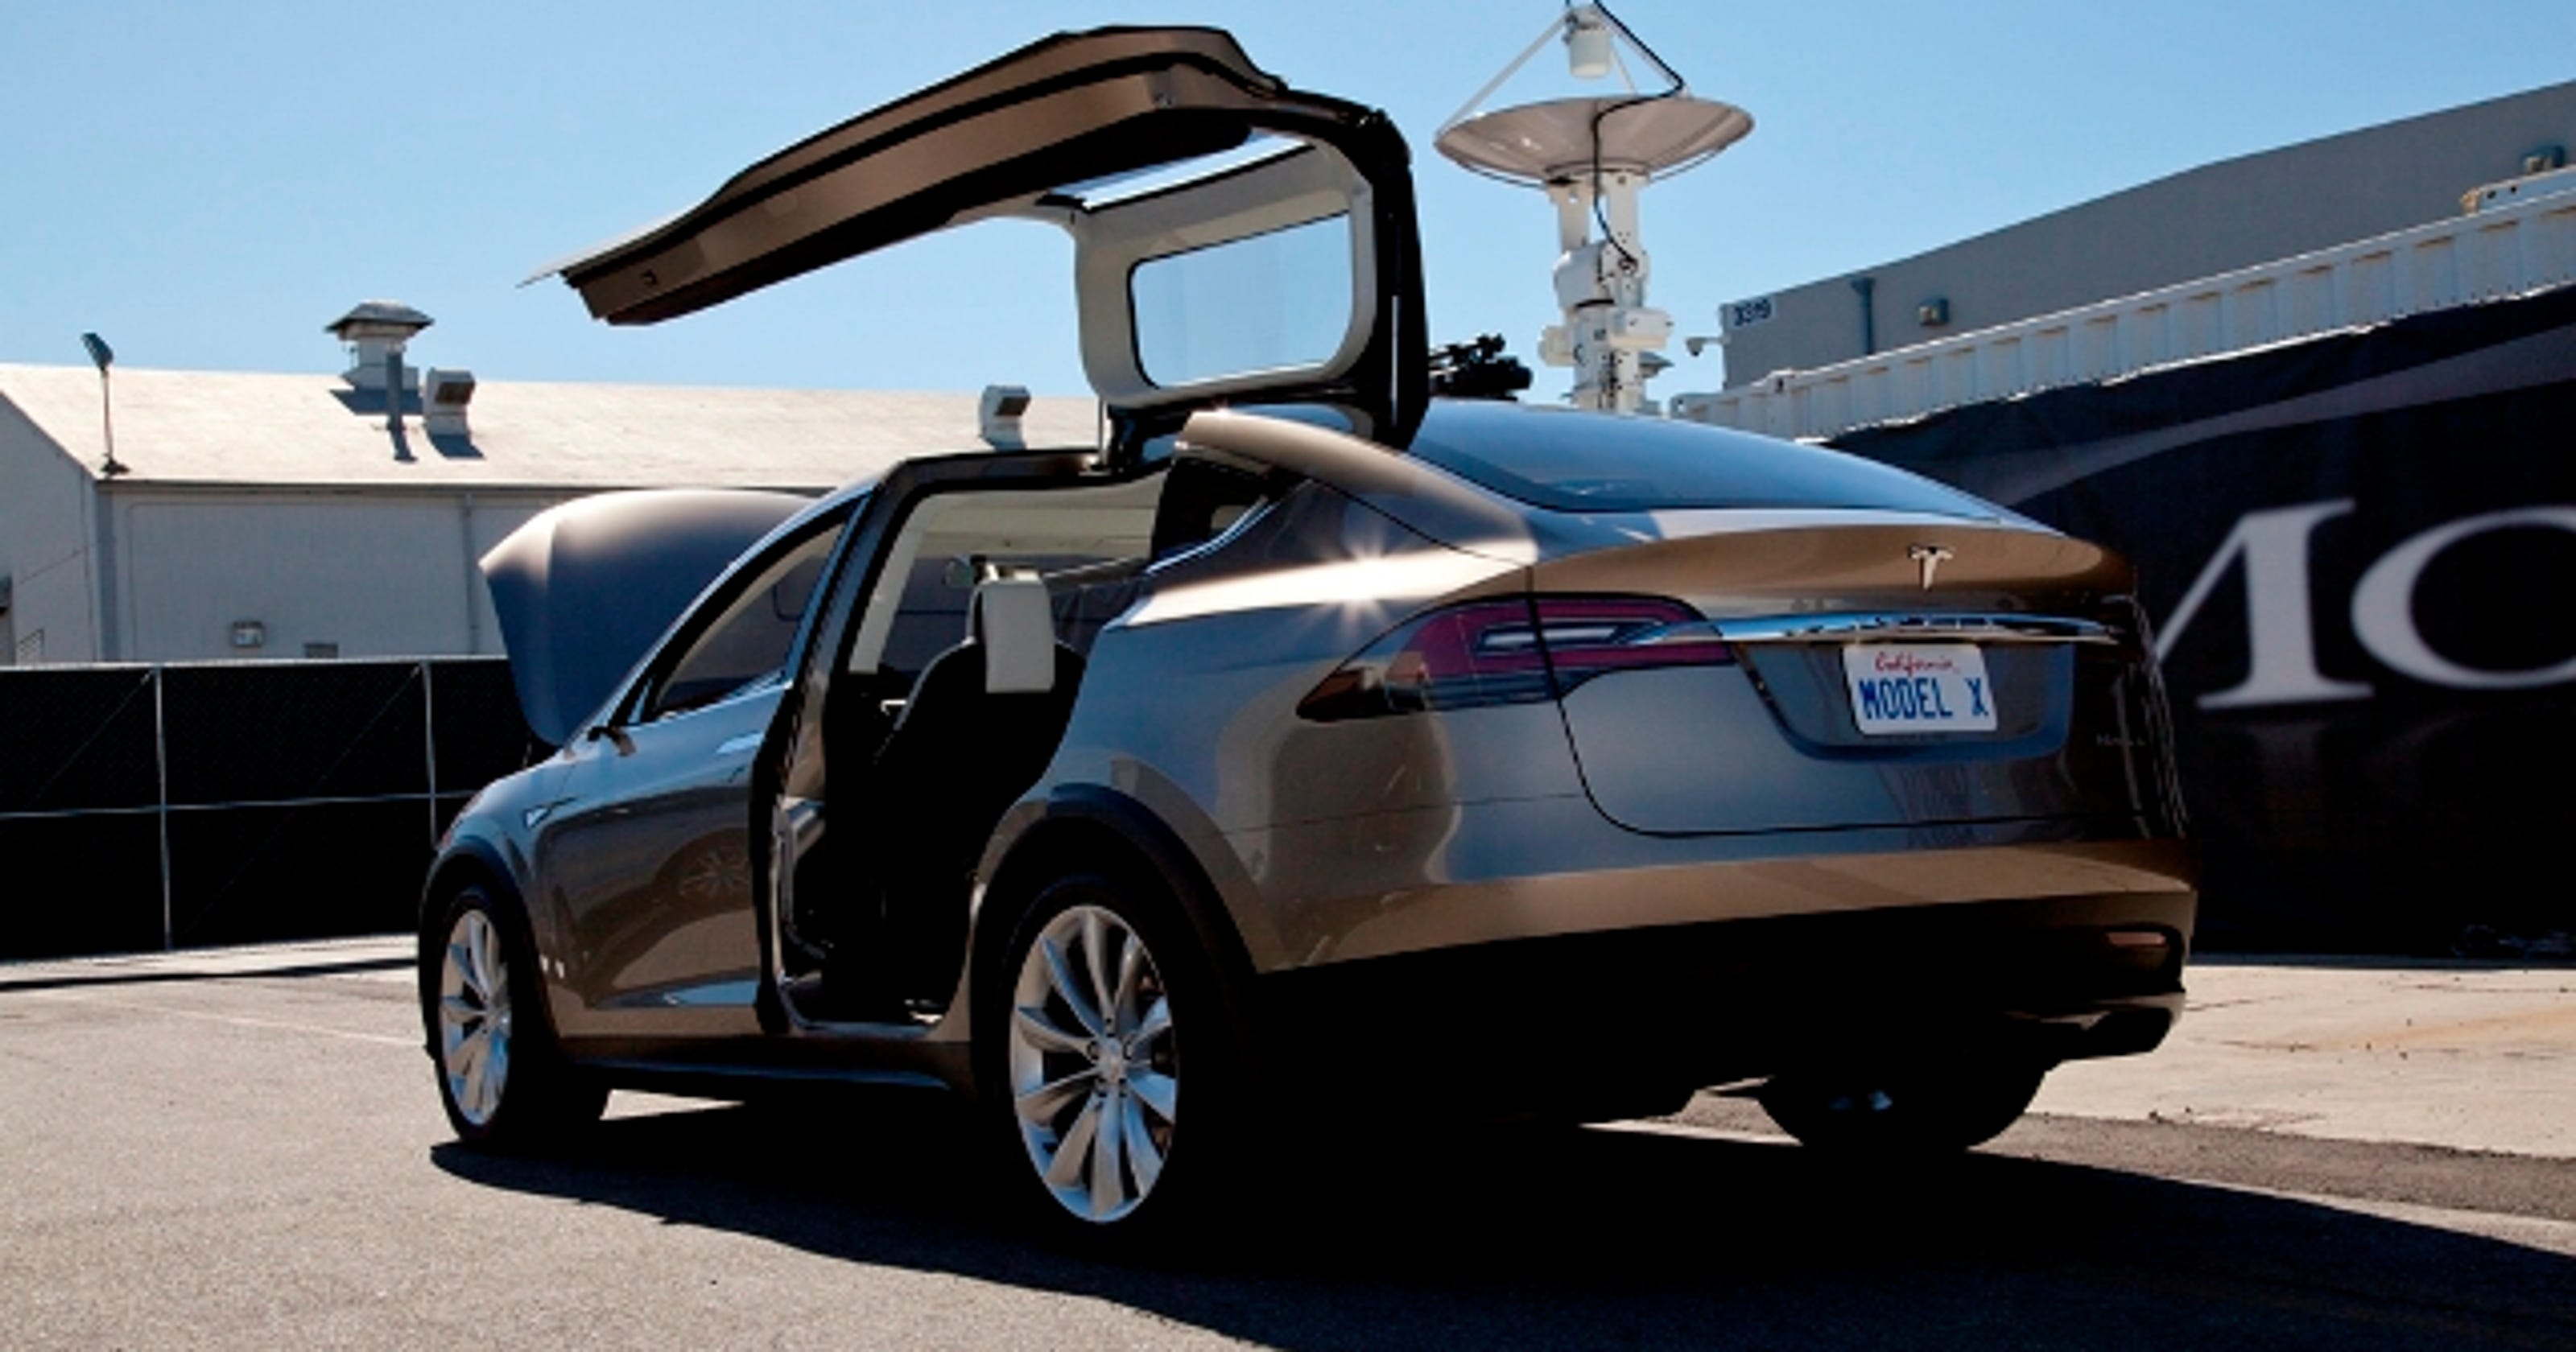 Tesla reports big Q4 sales, but no SUV yet